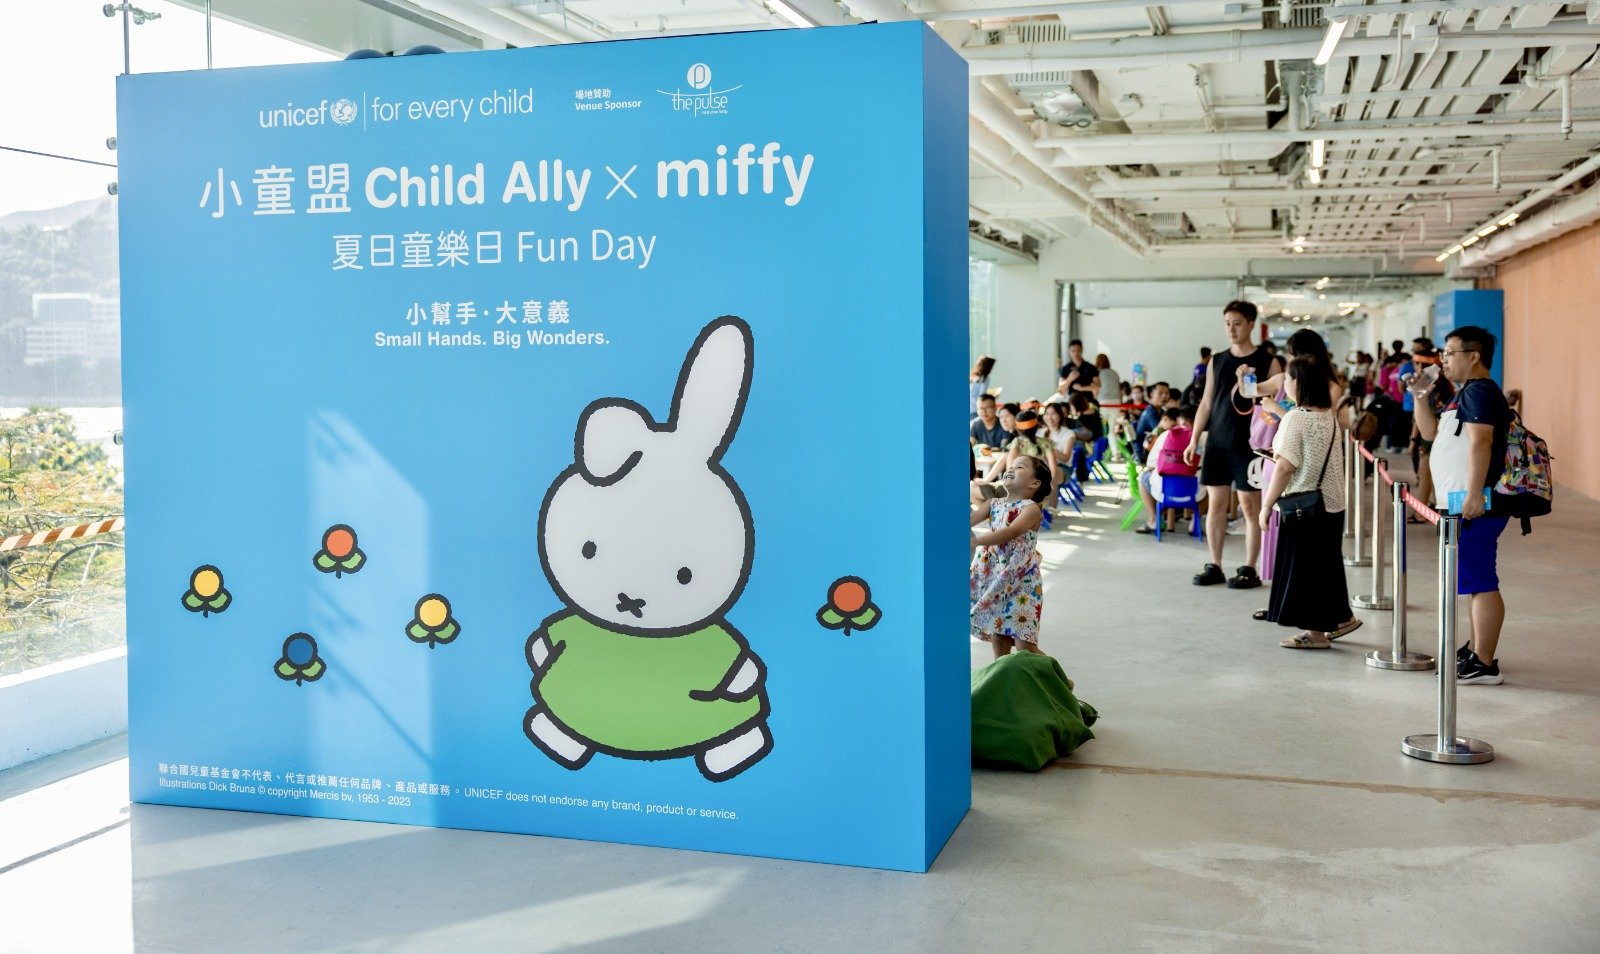 「UNICEF HK小童盟 X miffy 夏日童樂日」本週末在淺水灣the pulse 舉行。.jpeg